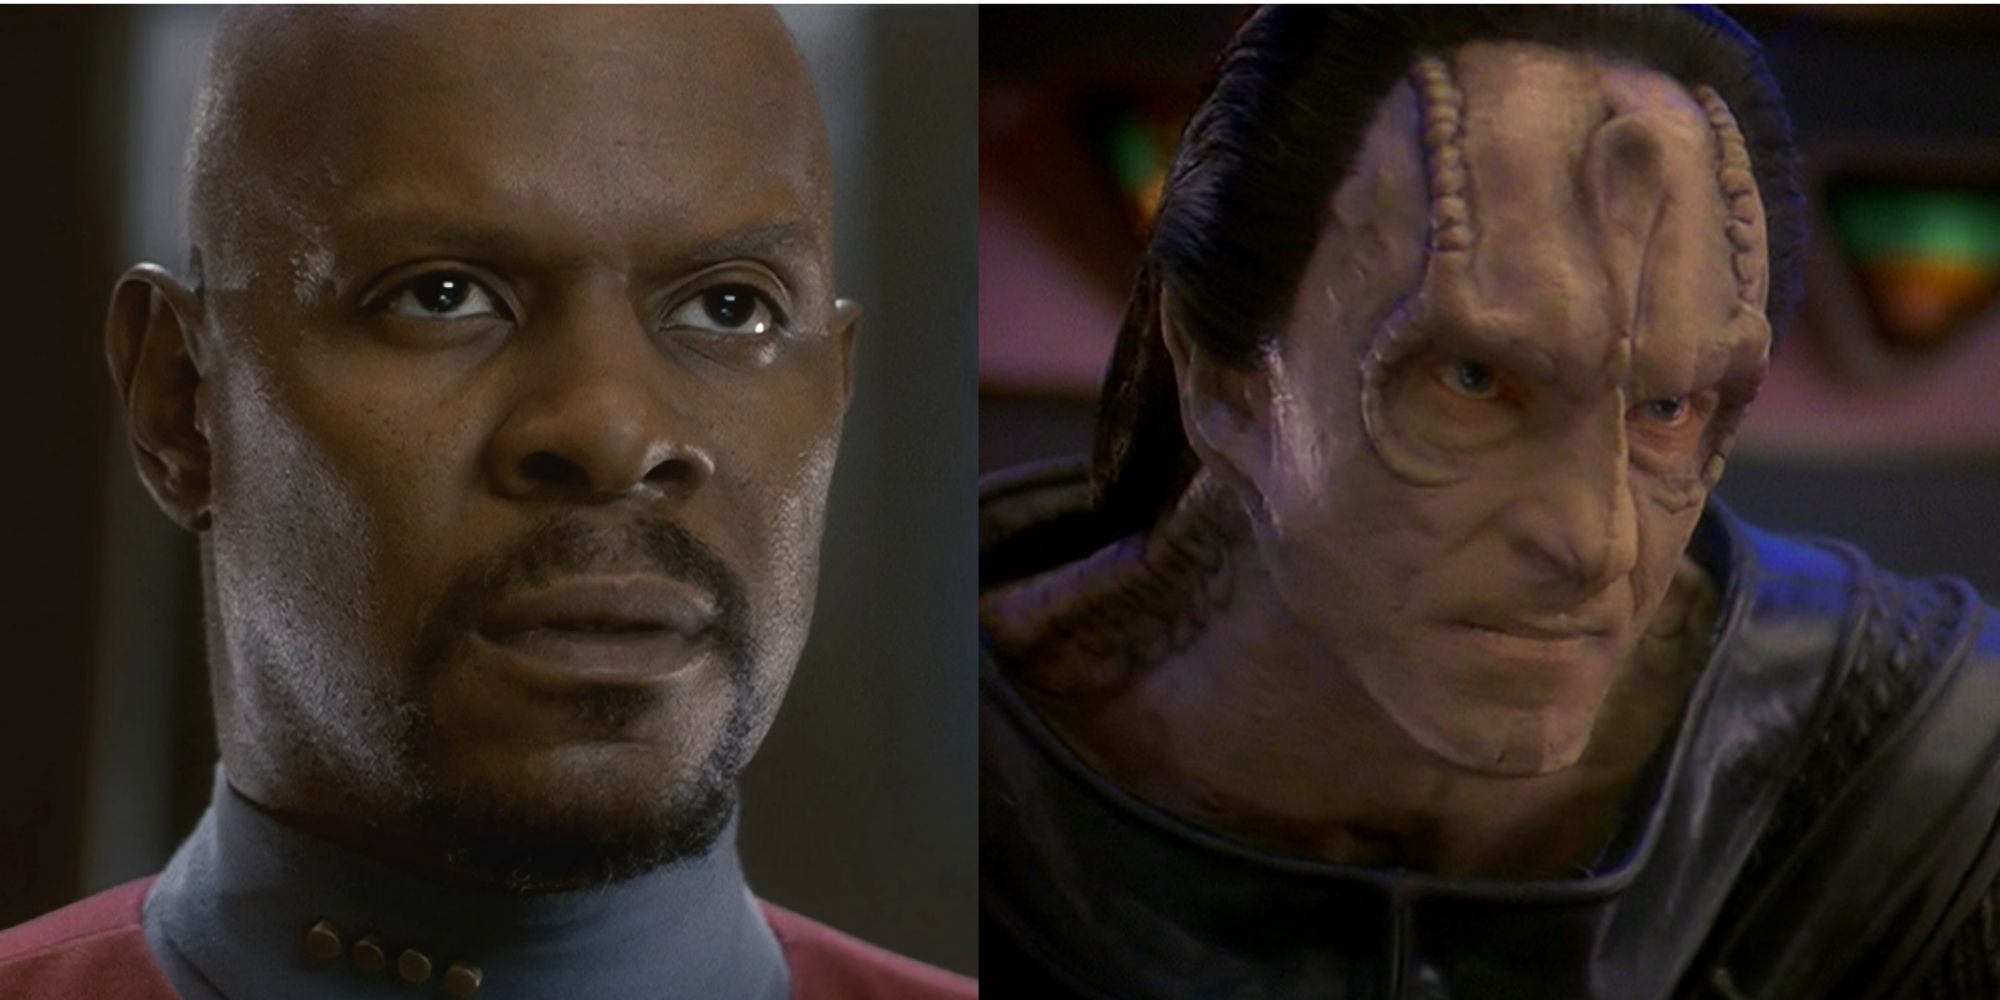 A split image showing Benjamin Sisko and Gul Dukat in Star Trek: Deep Space Nine